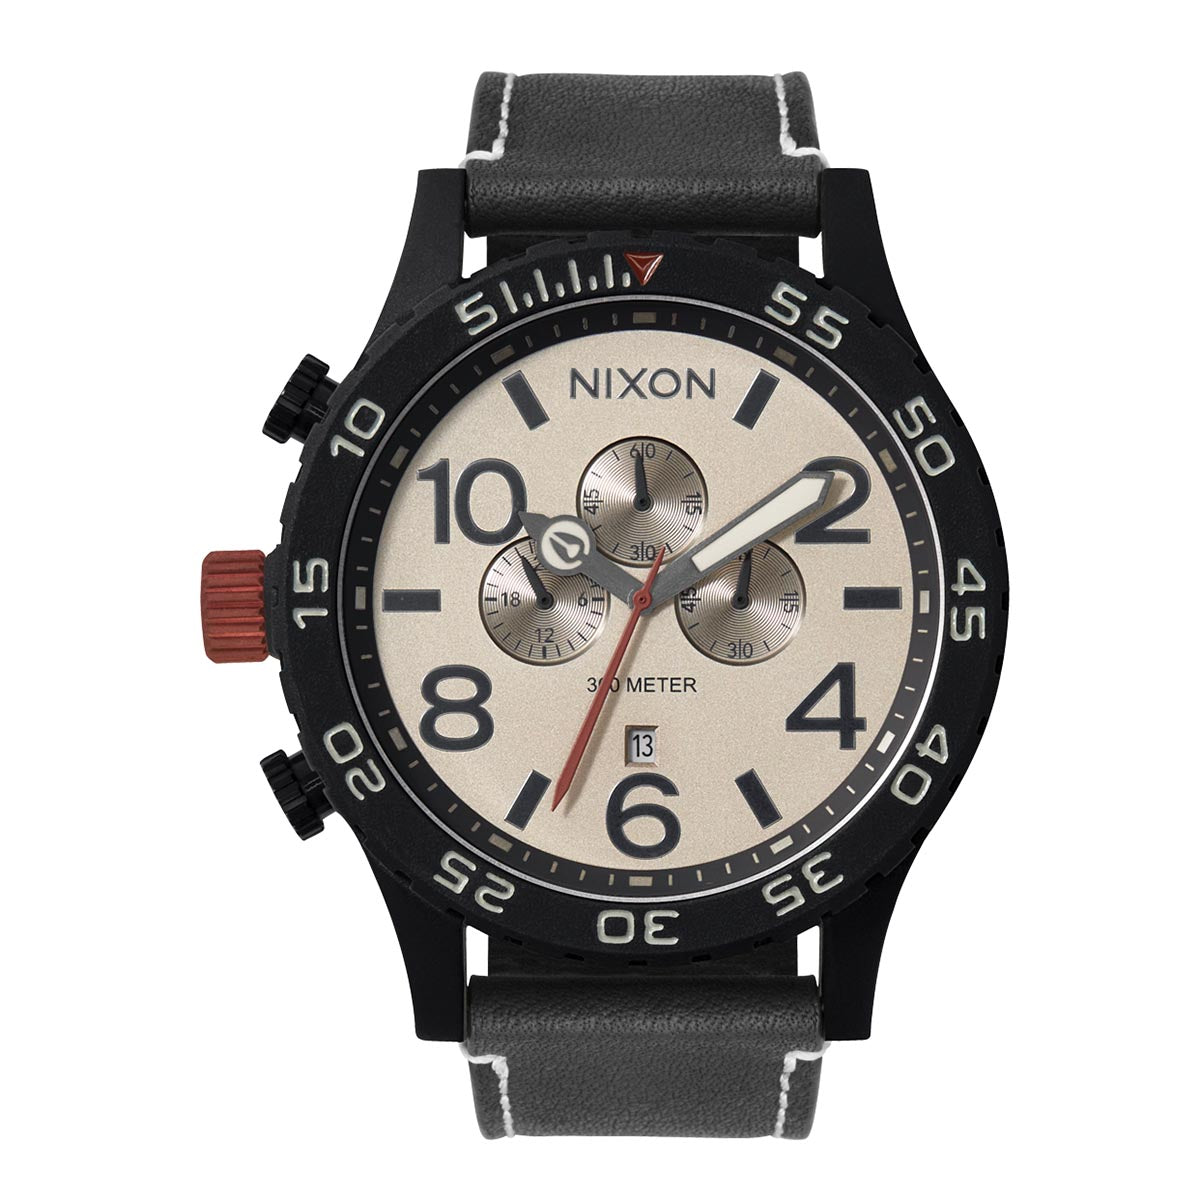 Nixon 51-30 Chrono Leather Watch - Black/Pumice/Charcoal image 4